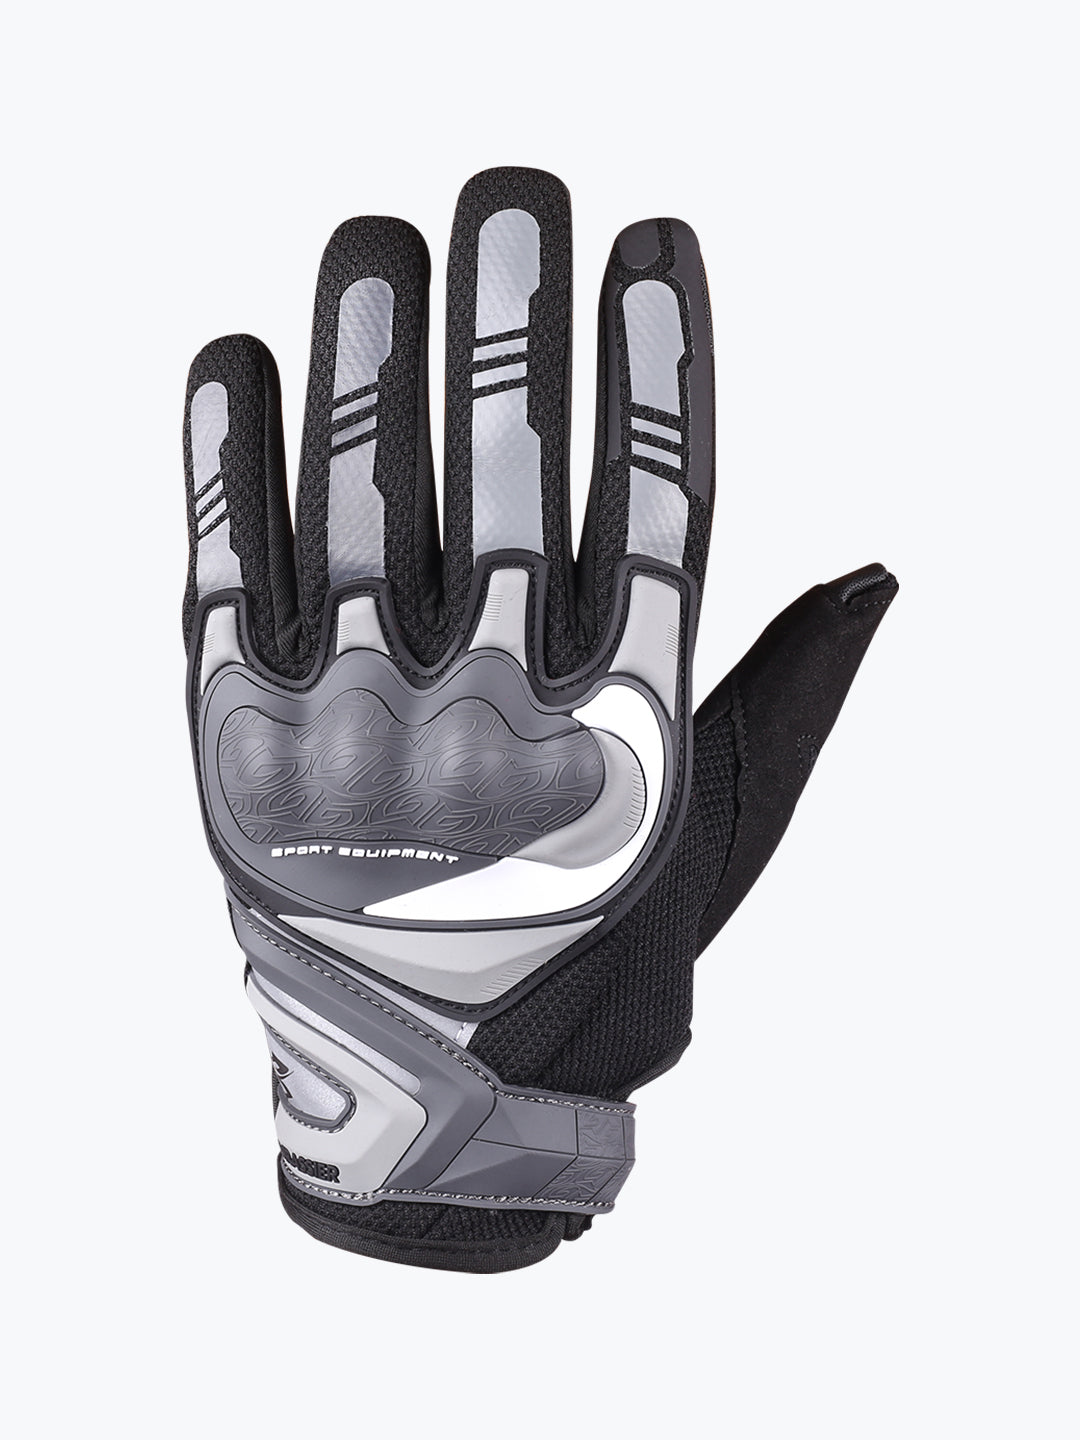 Cuirassier Gloves Black Grey